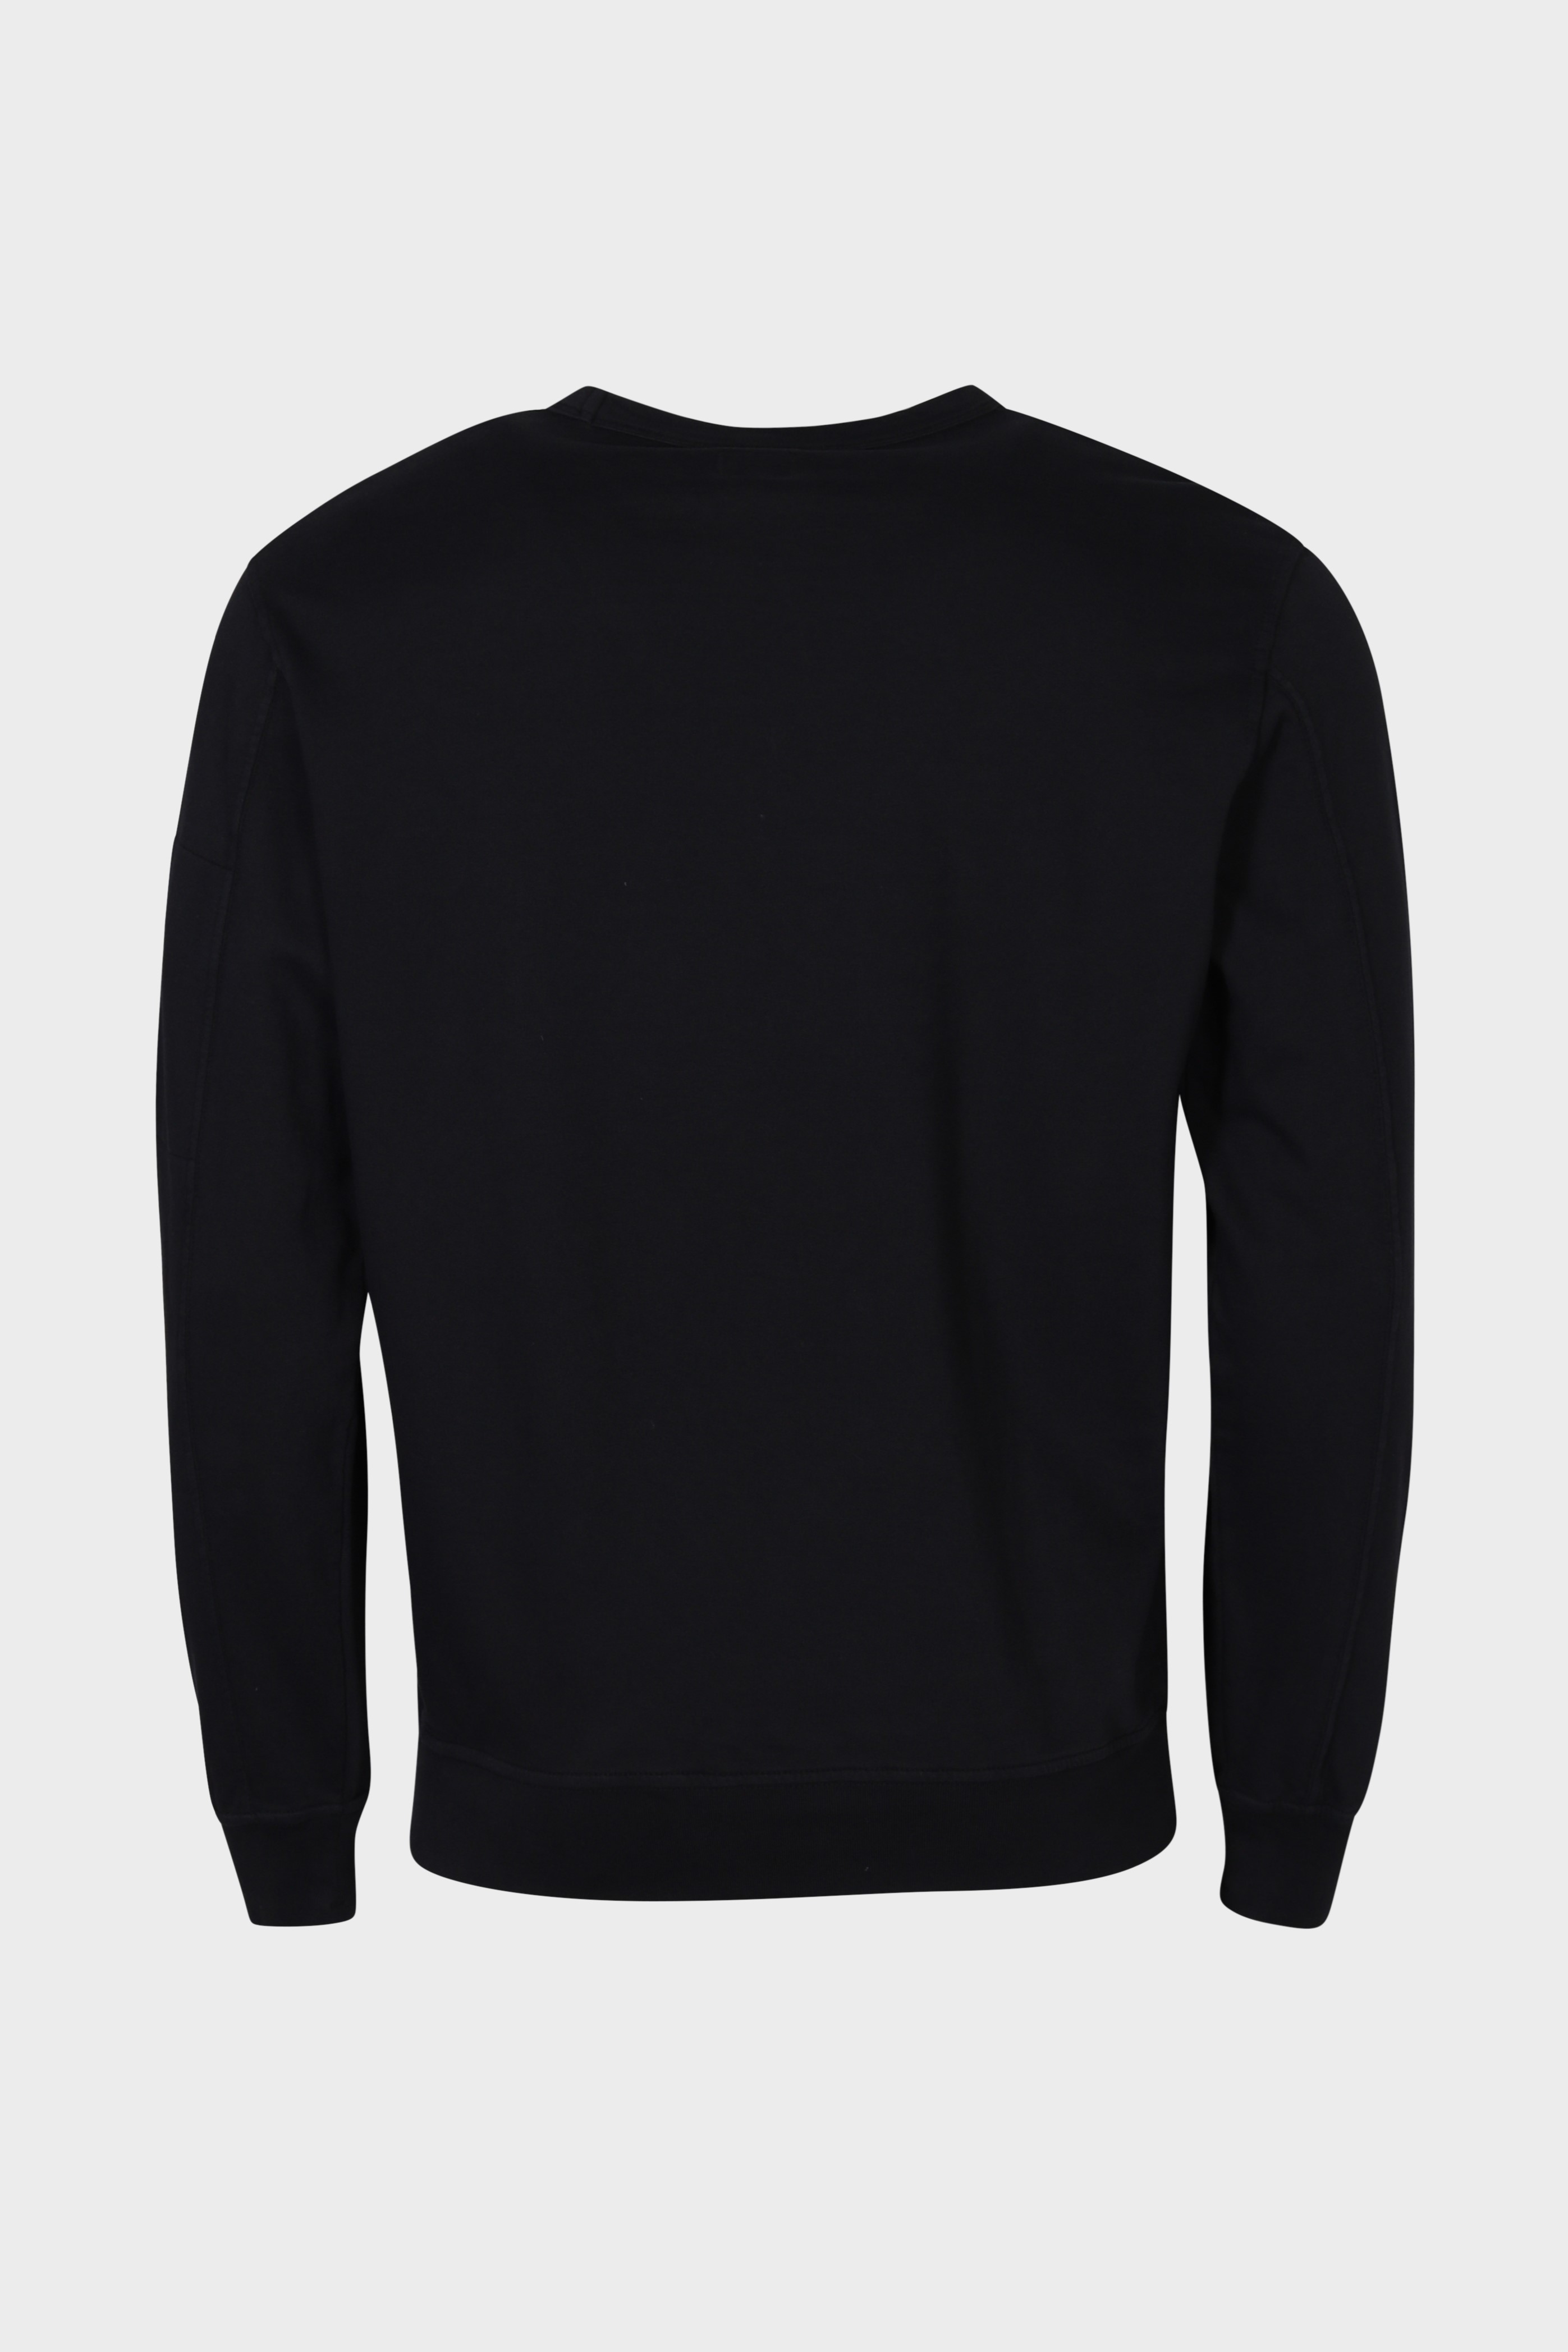 C.P. COMPANY Light Fleece Sweatshirt in Black XL